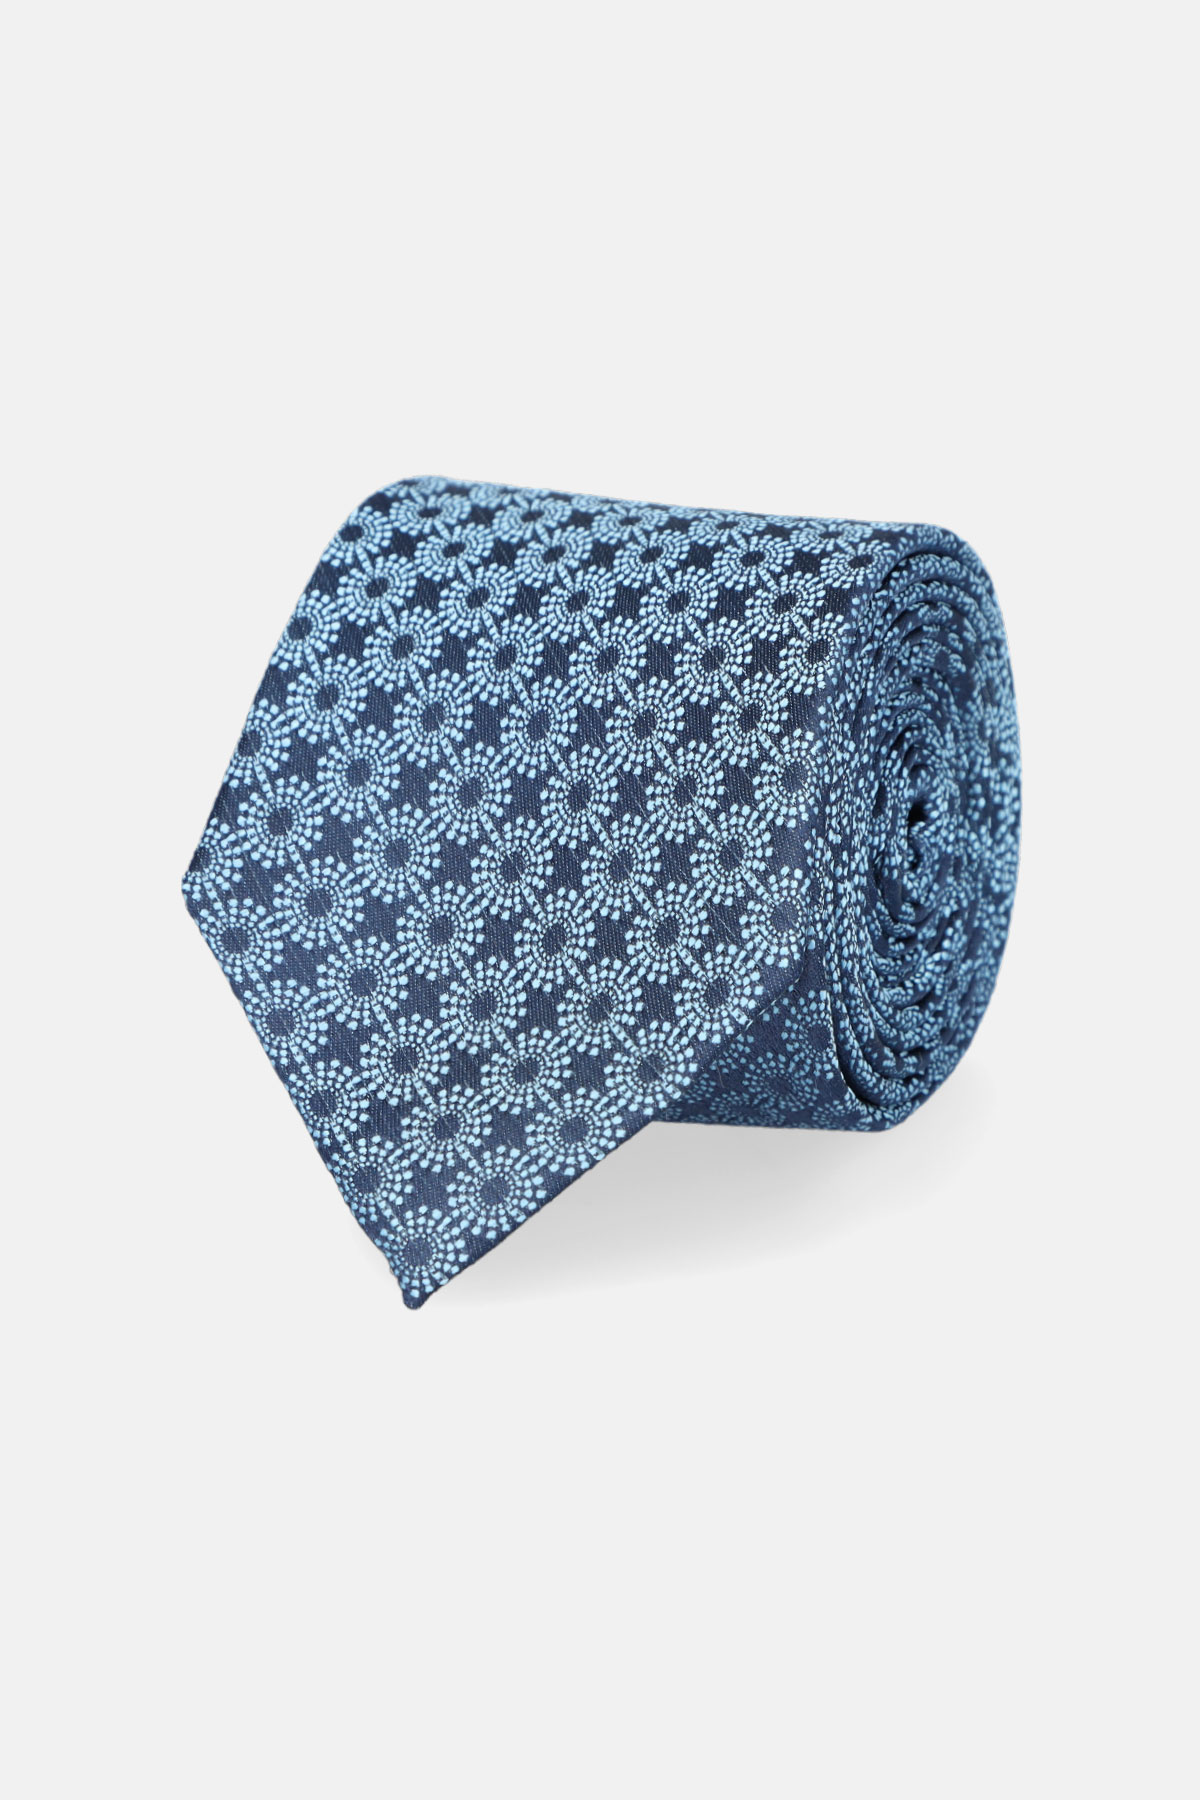 Krawat Niebieski Wzór